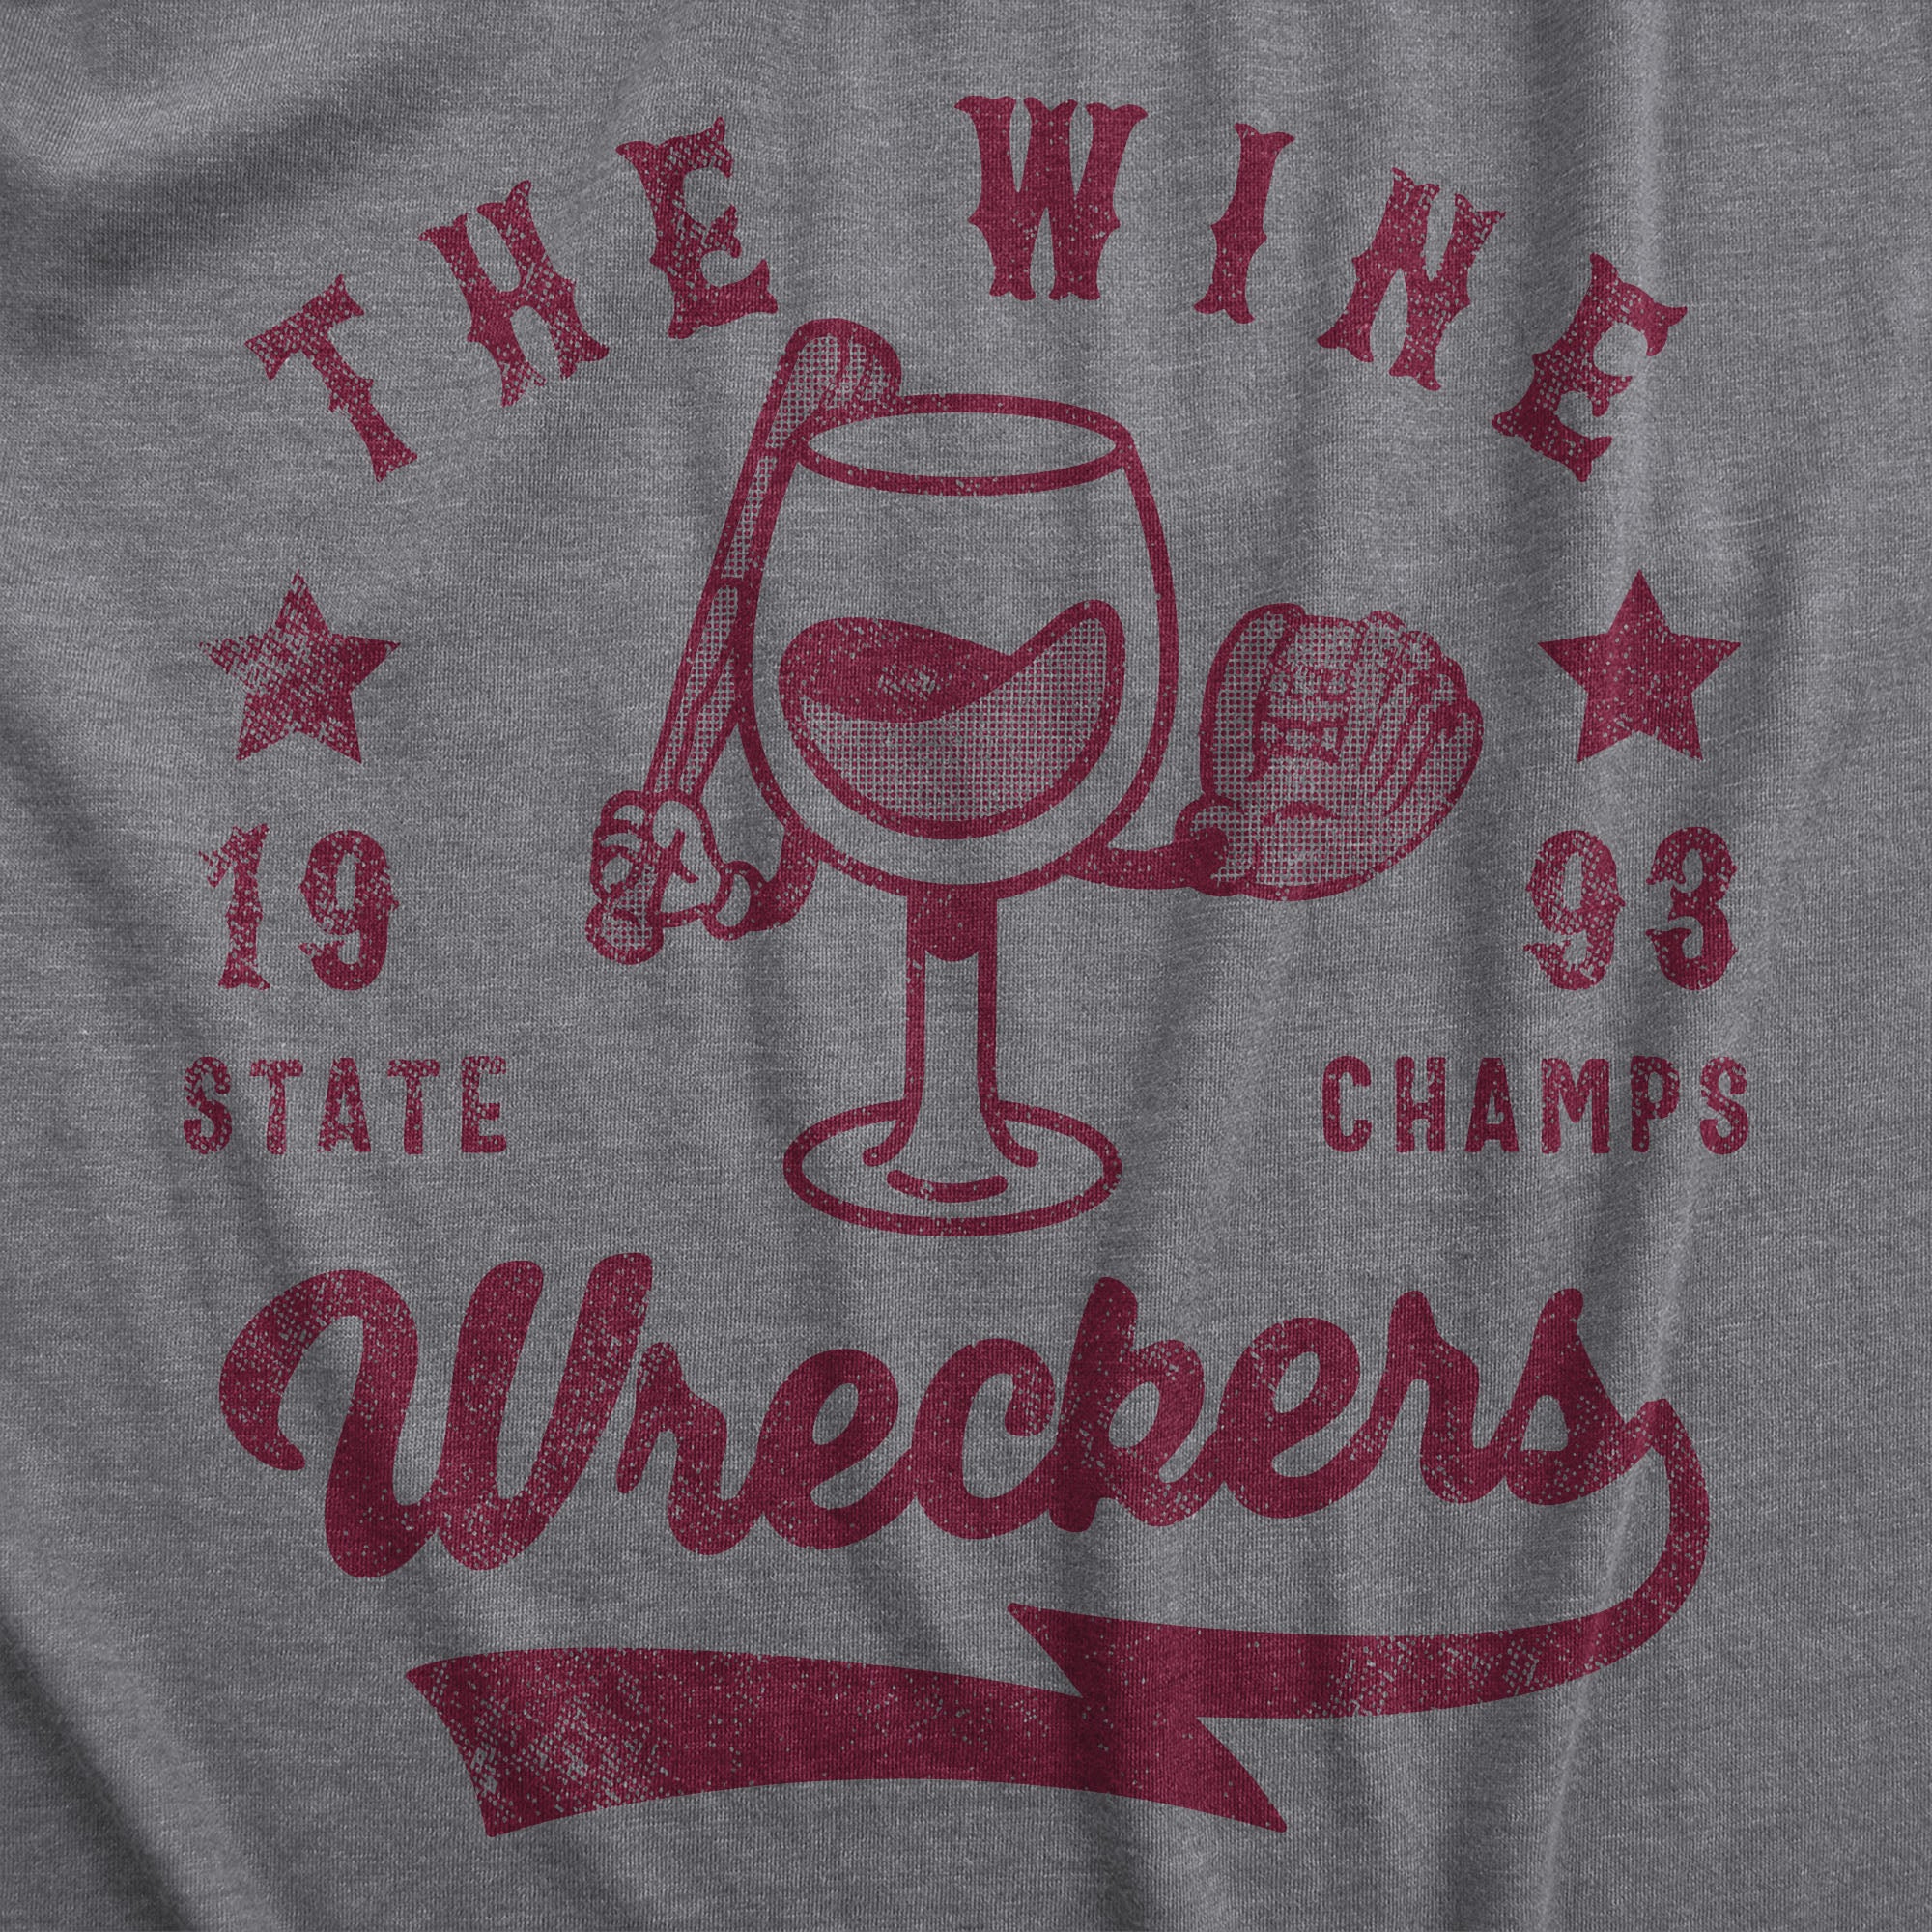 Funny Dark Heather Grey - WINE The Wine Wreckers State Champs Mens T Shirt Nerdy Wine Baseball Tee